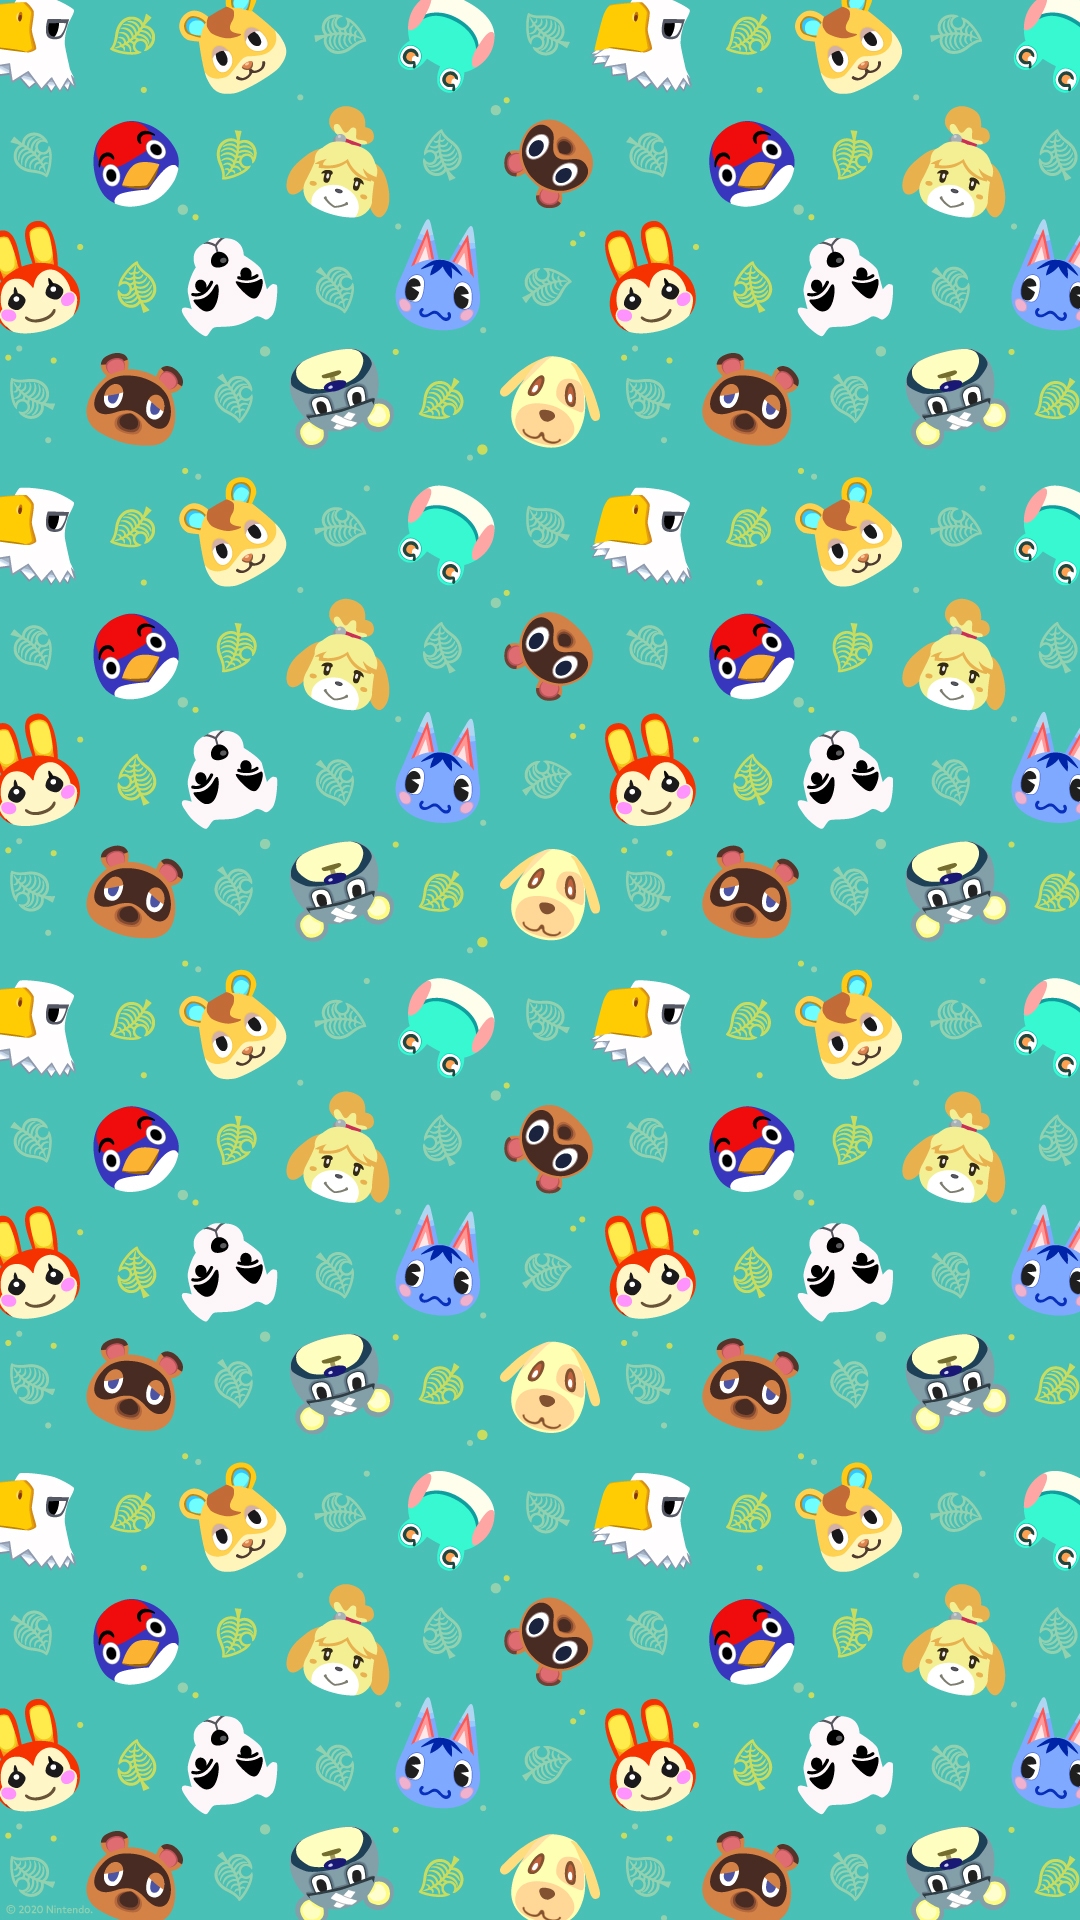 Animal Crossing iPhone wallpaper Walmart iDownloadBlog 2